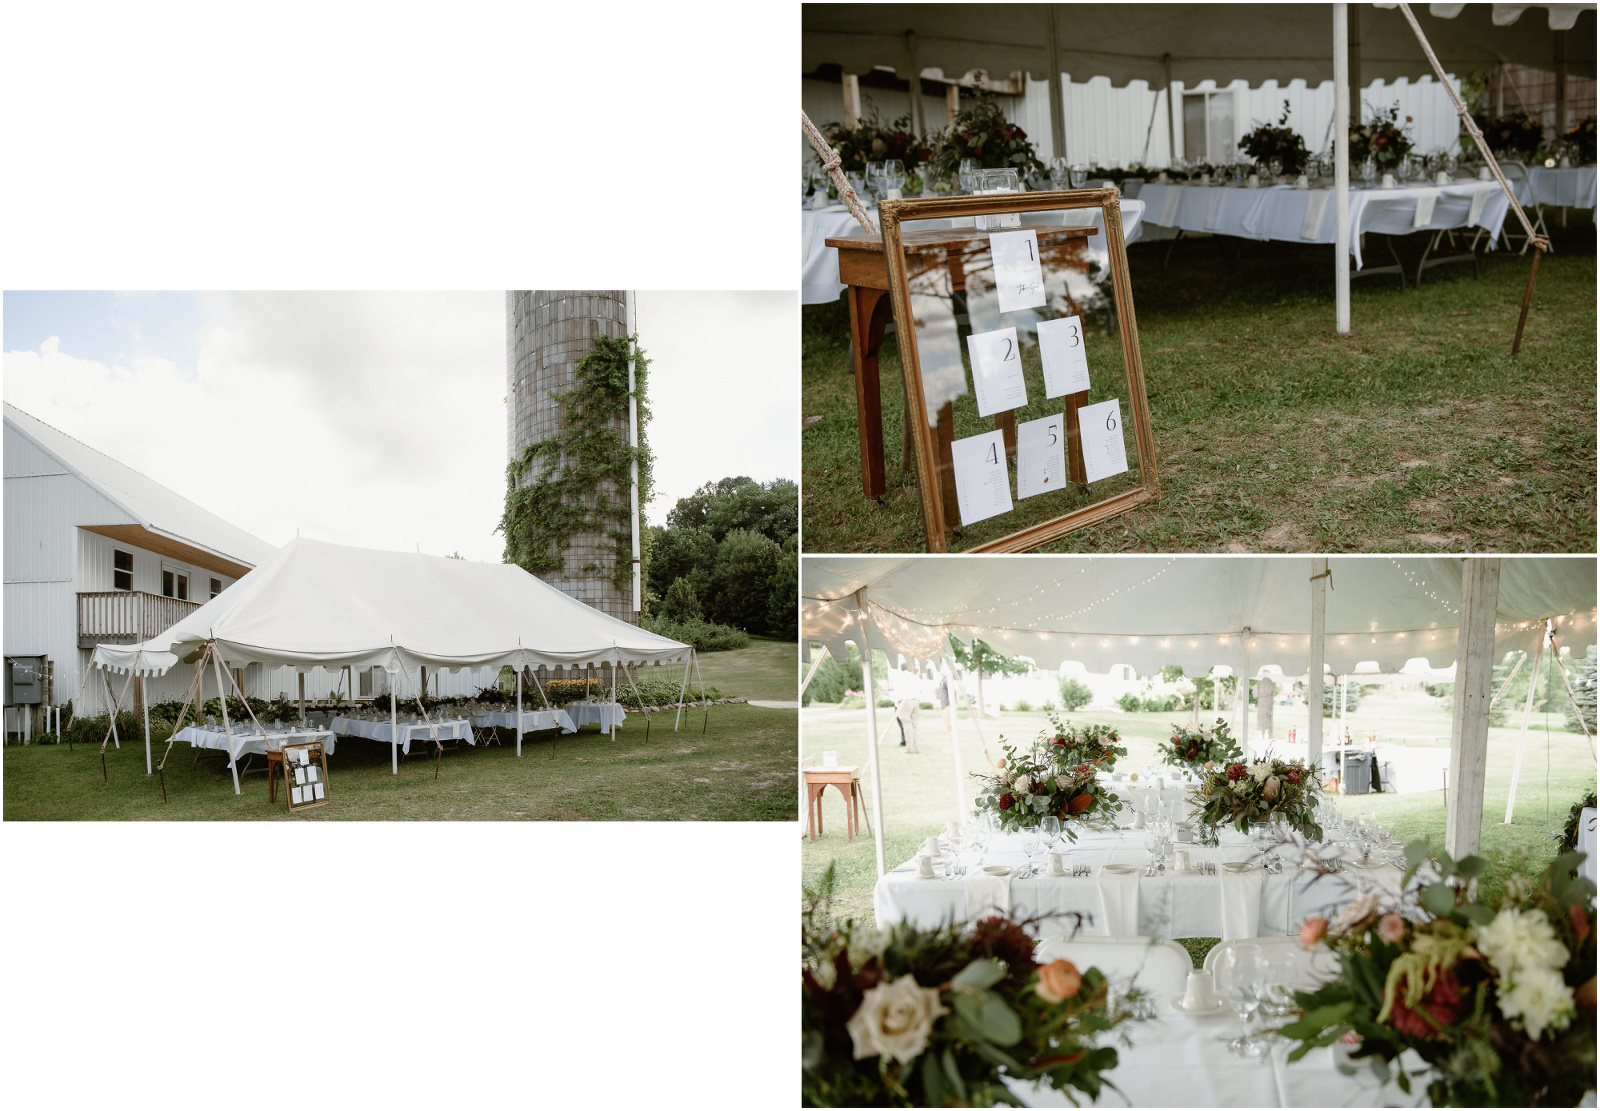 Backyard wedding reception details.